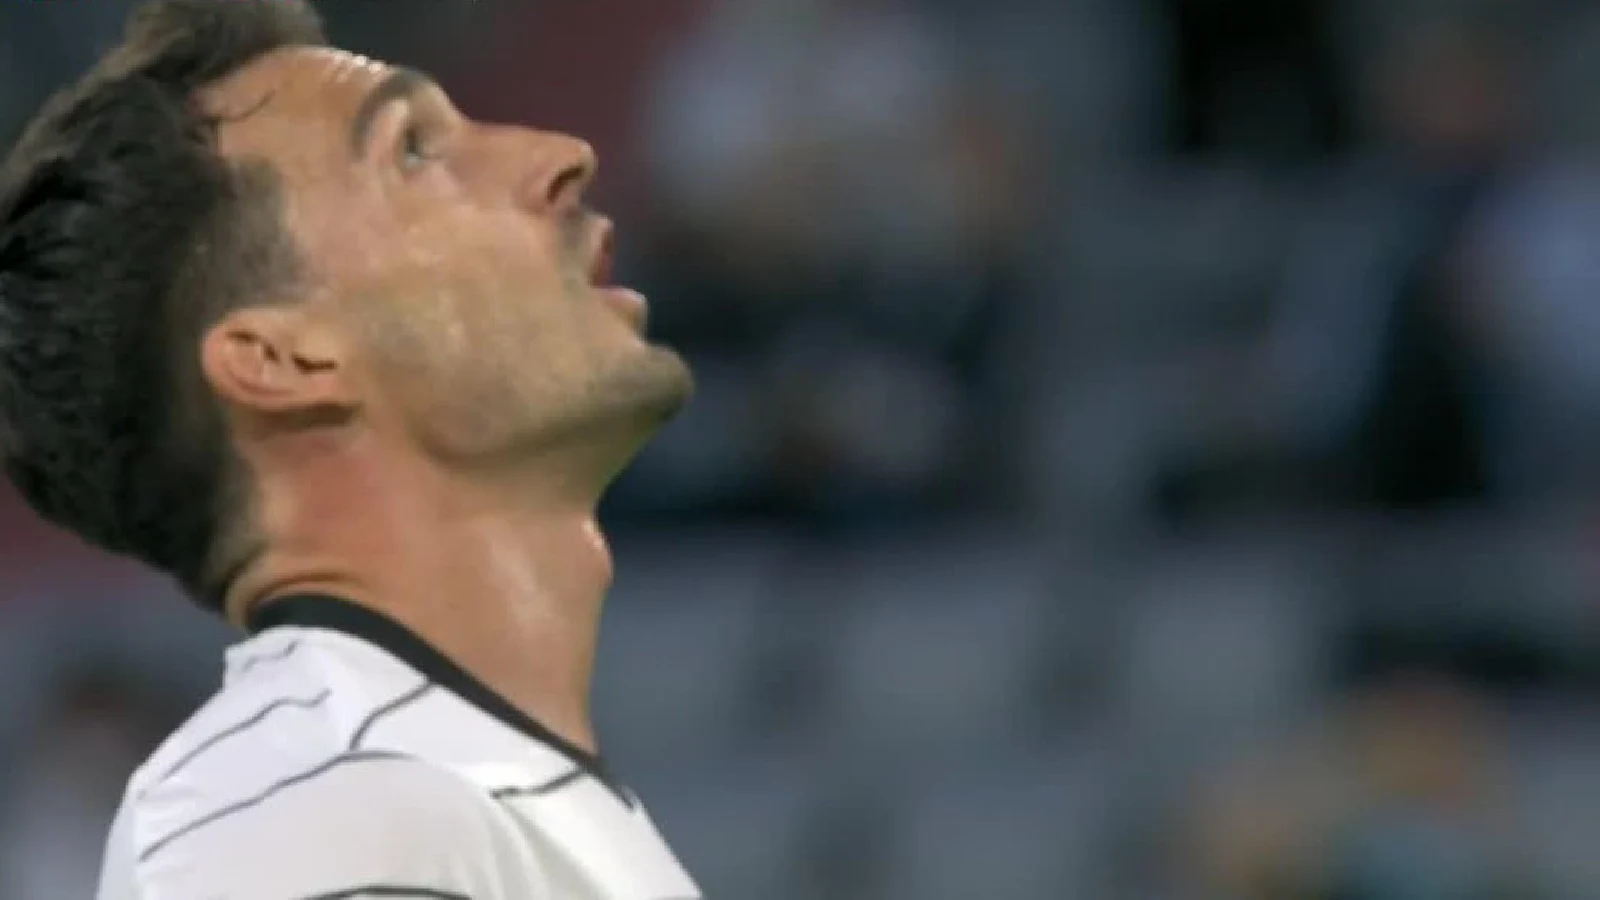 Mats Hummels screams in despair after scoring an own goal against France